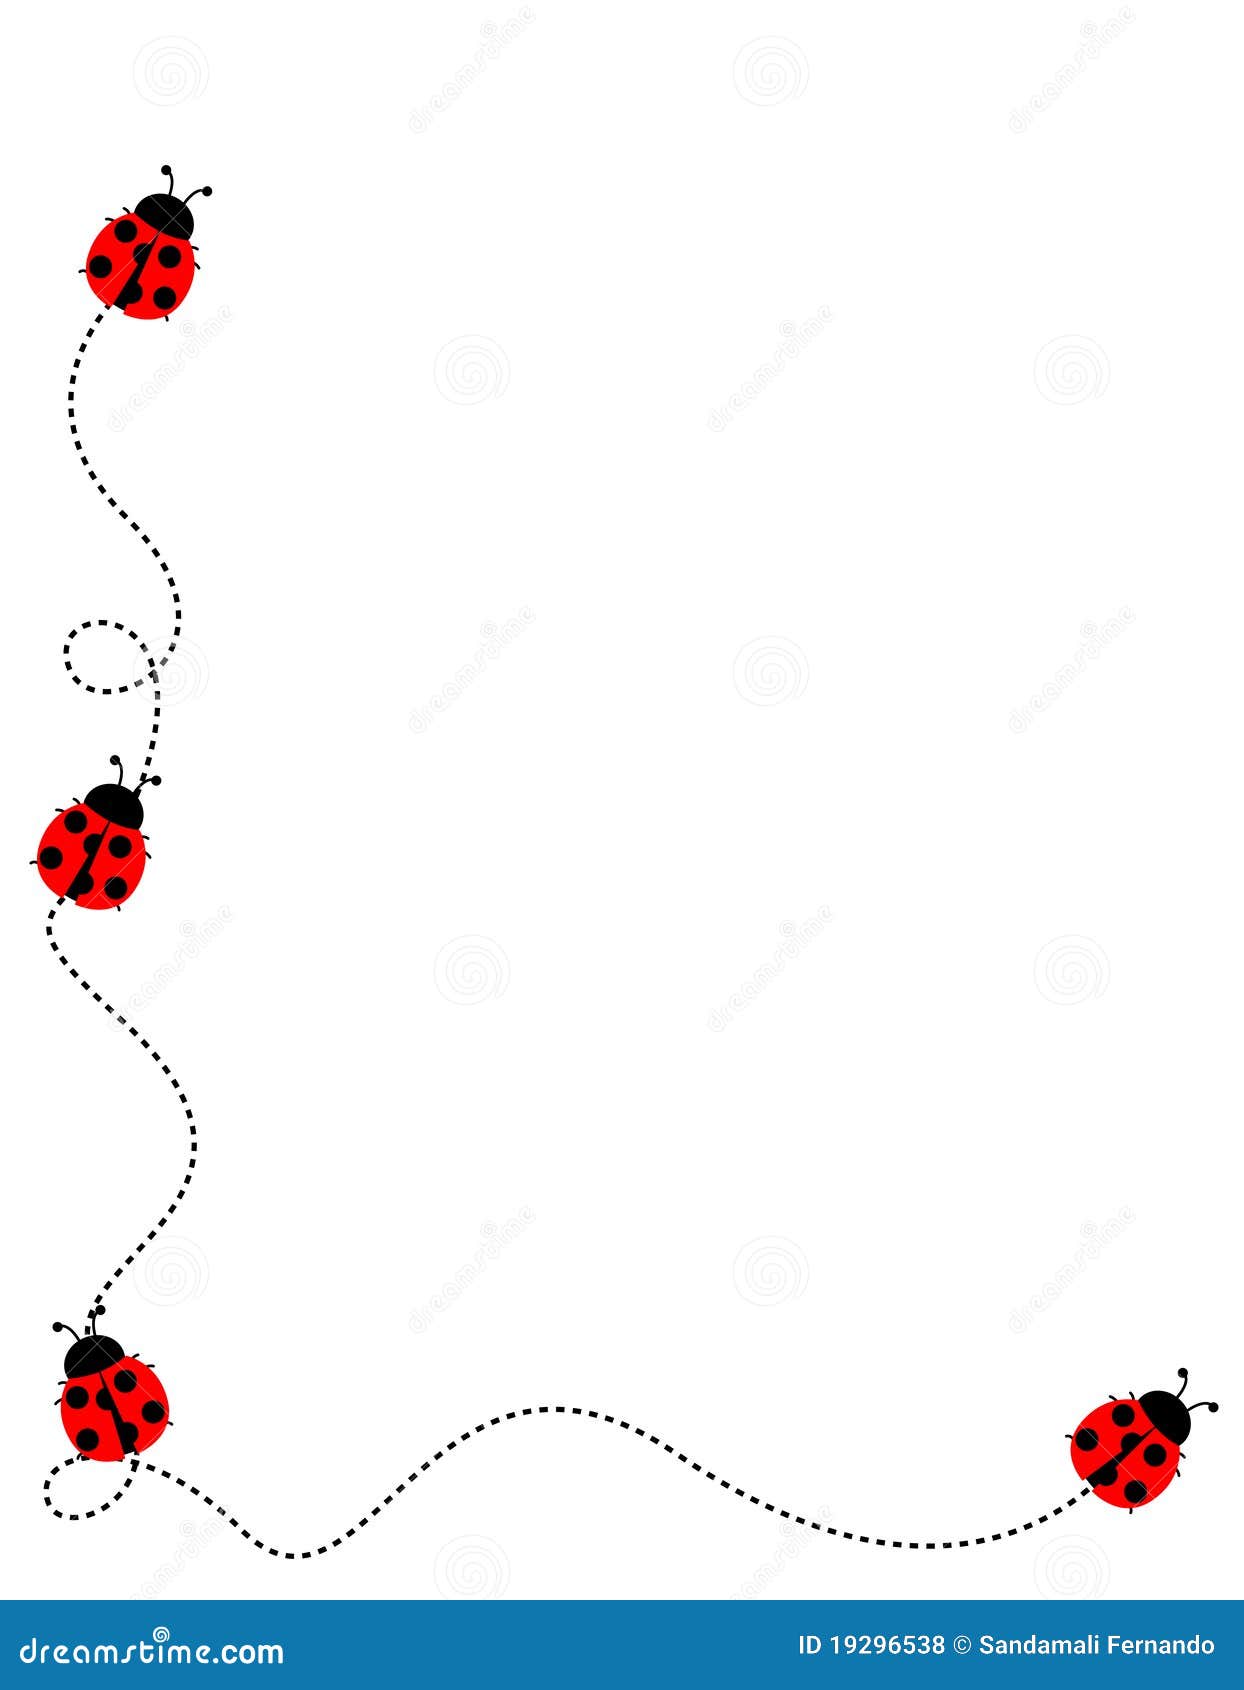 ladybug clip art borders - photo #3